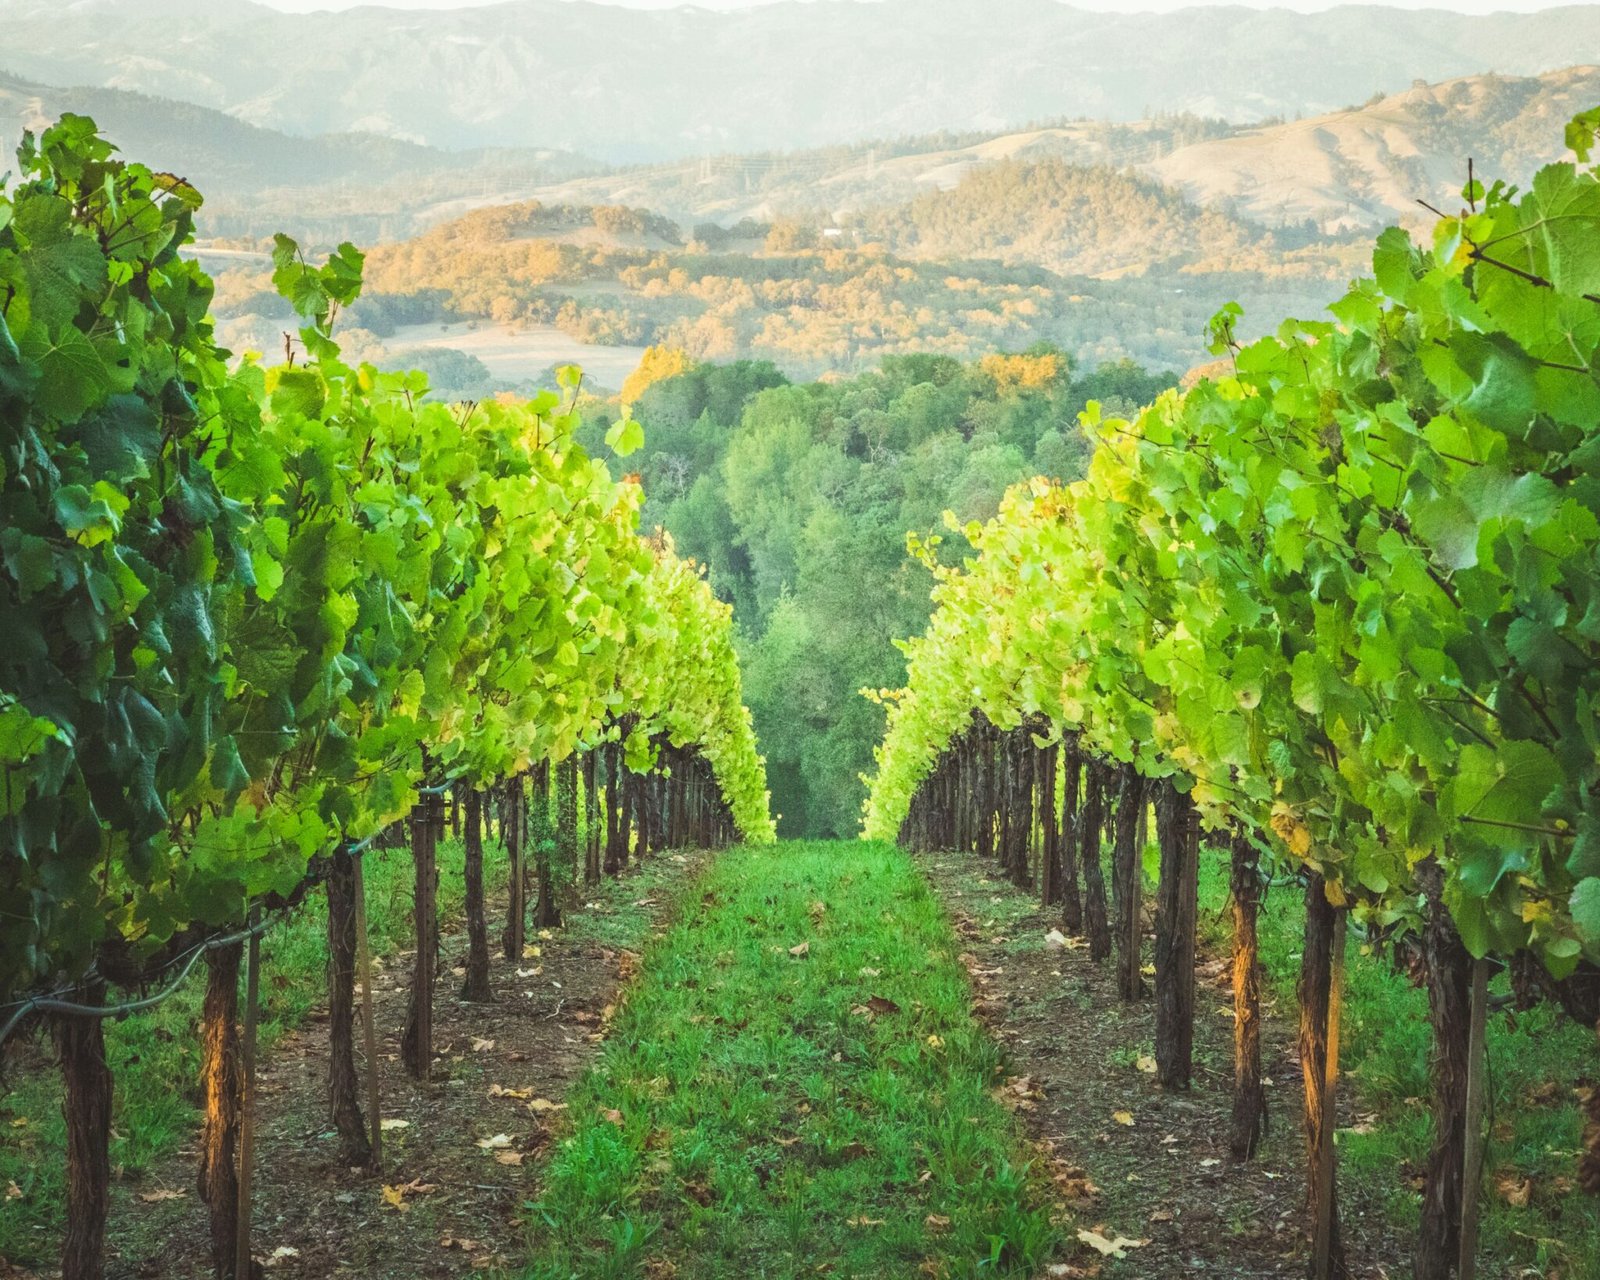 A field of Vineyards, like the ones you'll run through in the Santa Rosa Marathon.